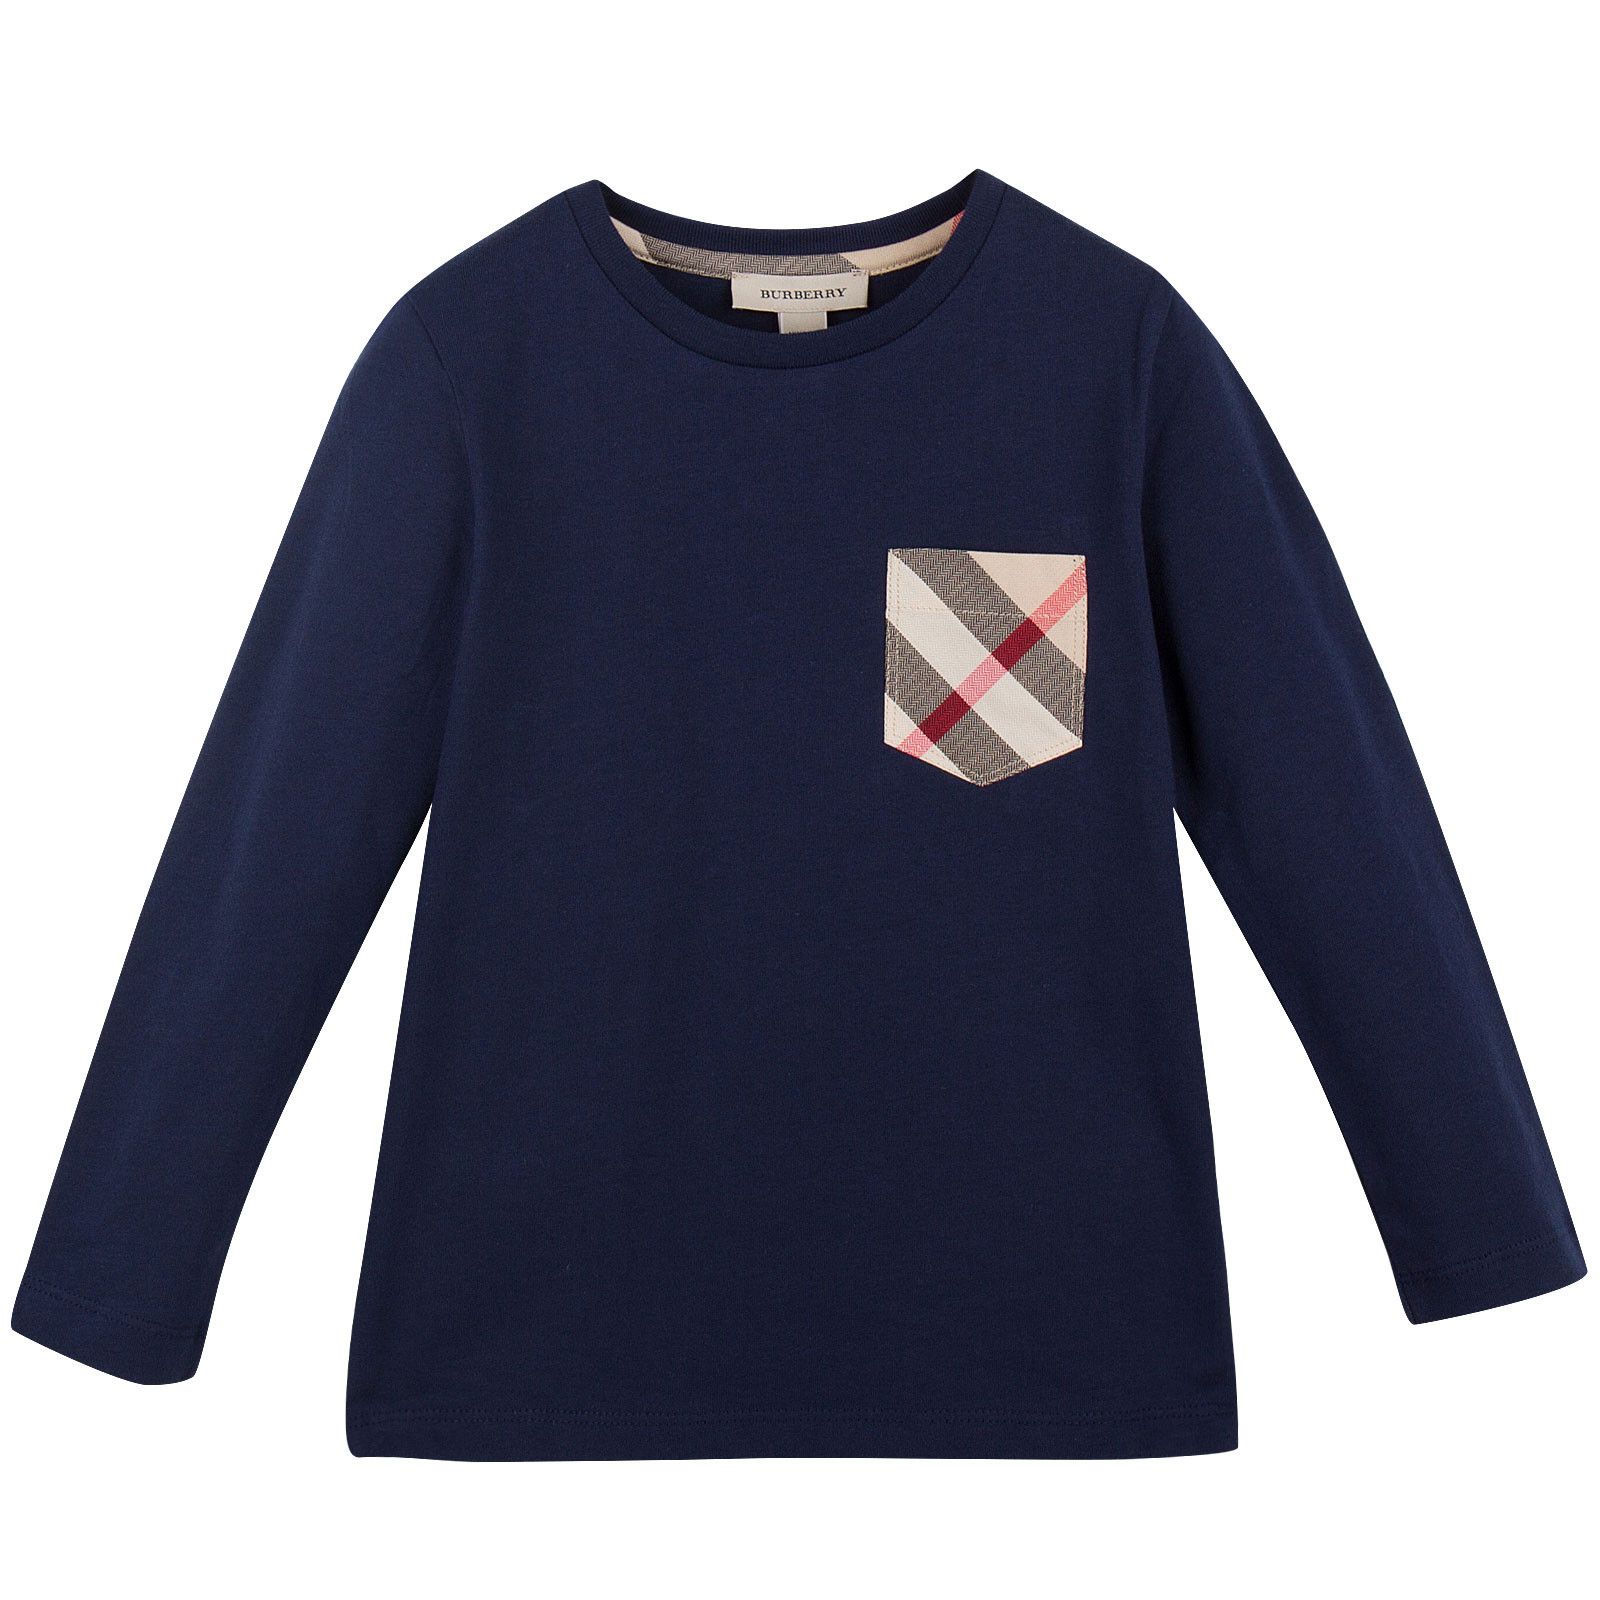 Boys Navy Blue Cotton T-Shirts With Check Pocket - CÉMAROSE | Children's Fashion Store - 1